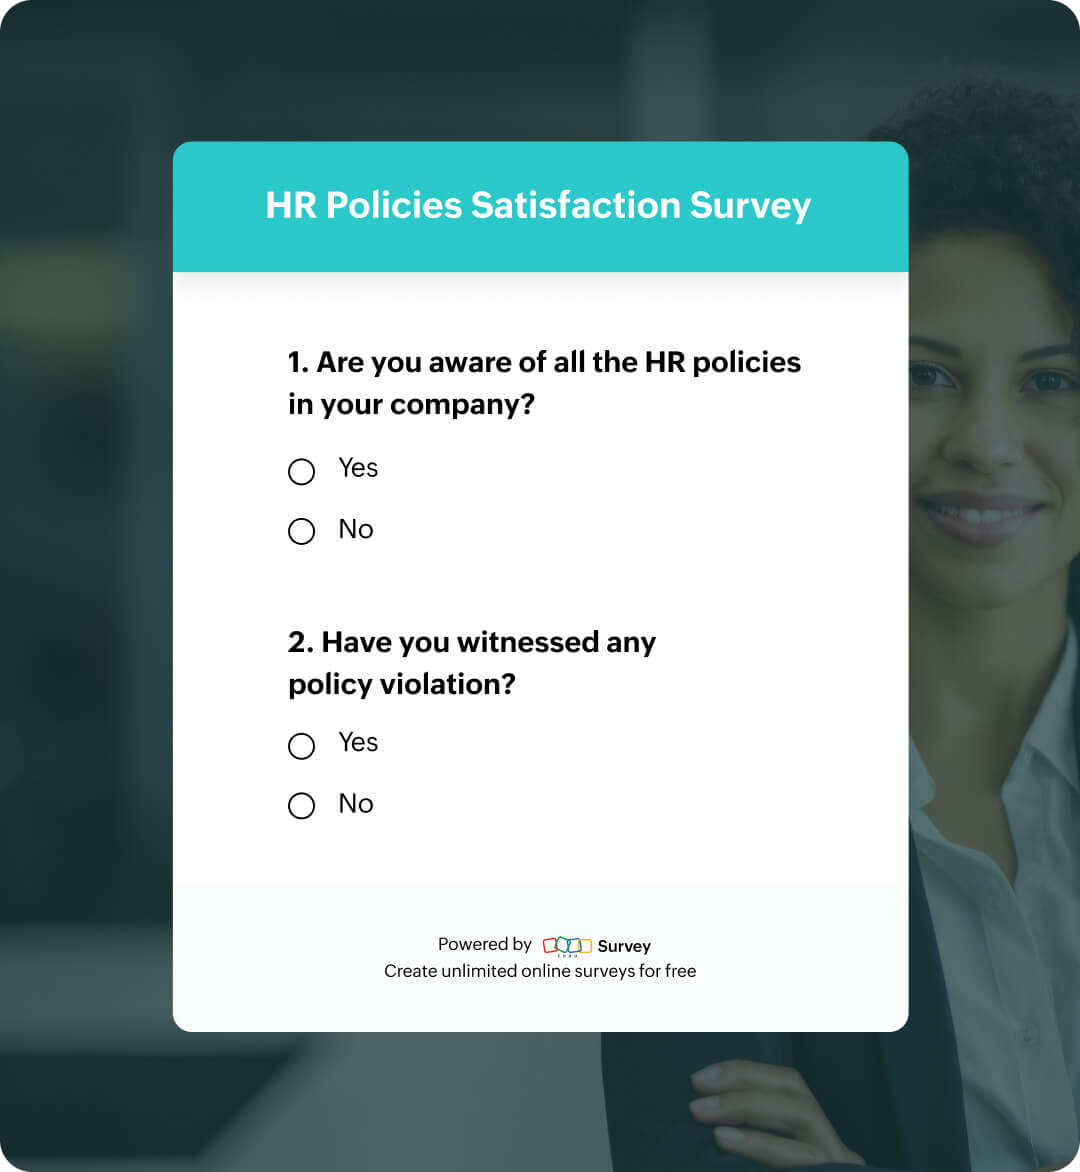 HR policies satisfaction survey questionnaire template